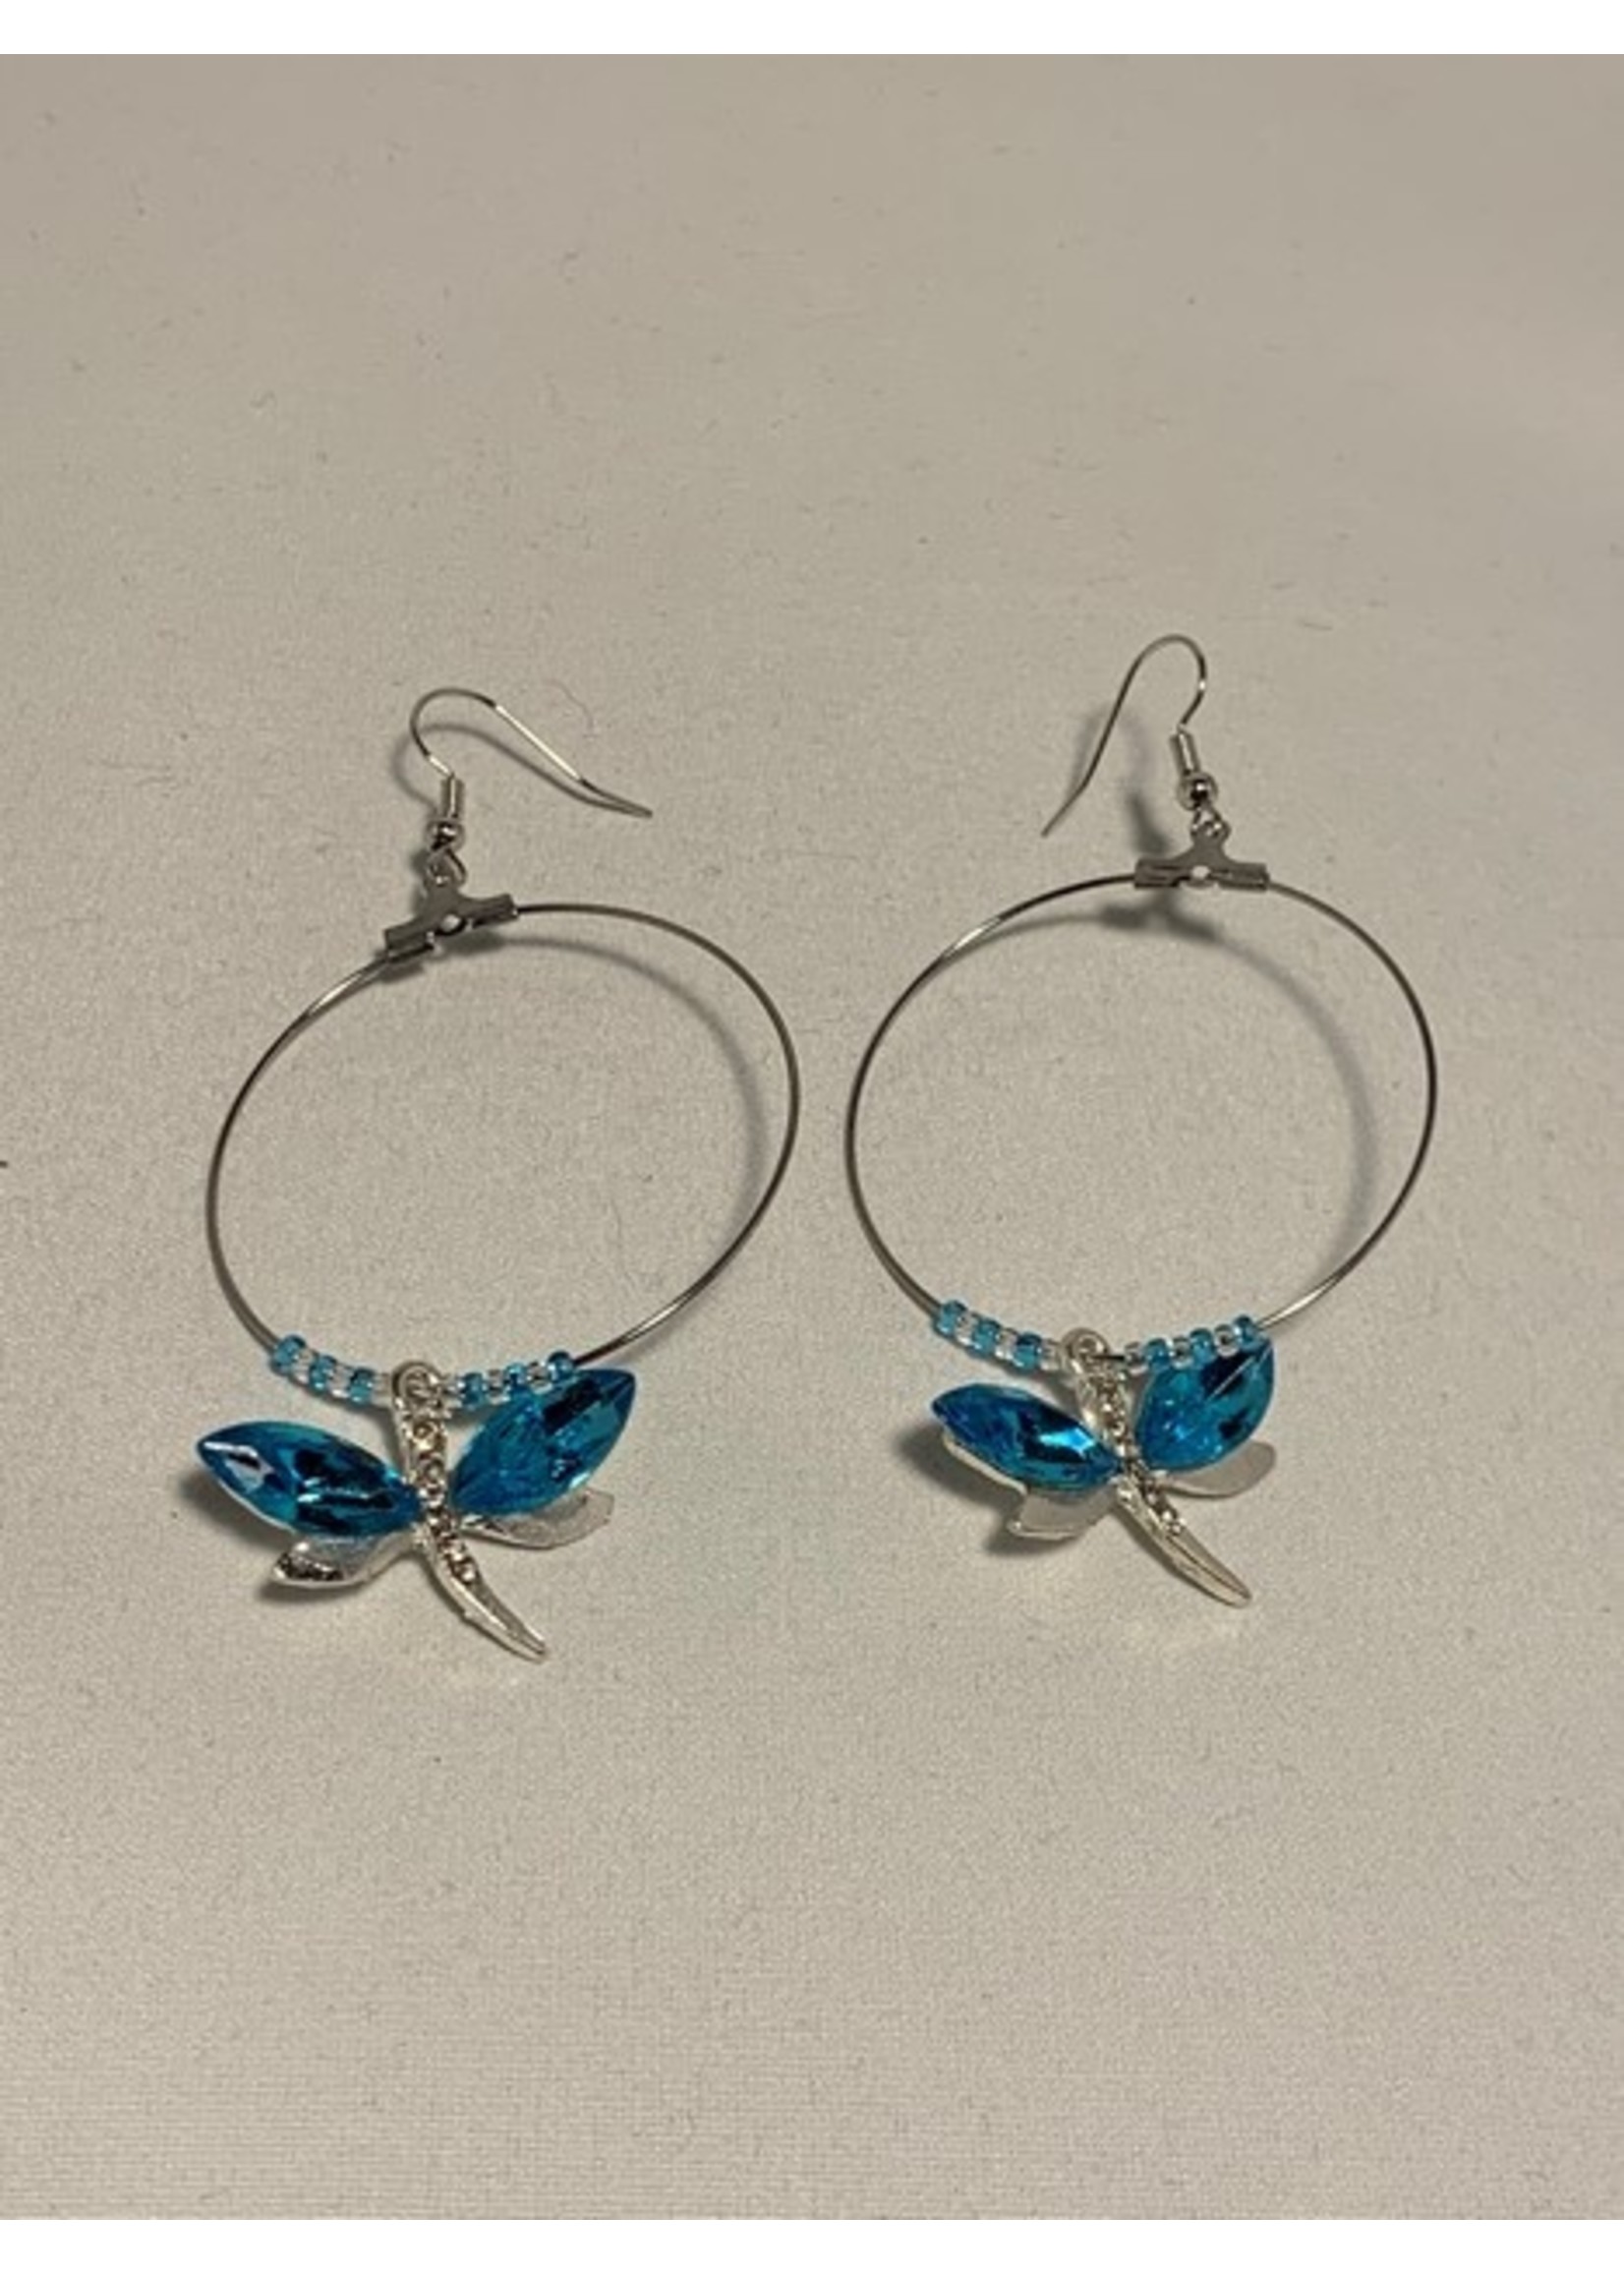 Large Hoop Earrings Light Blue Dragonfly (SOLD)